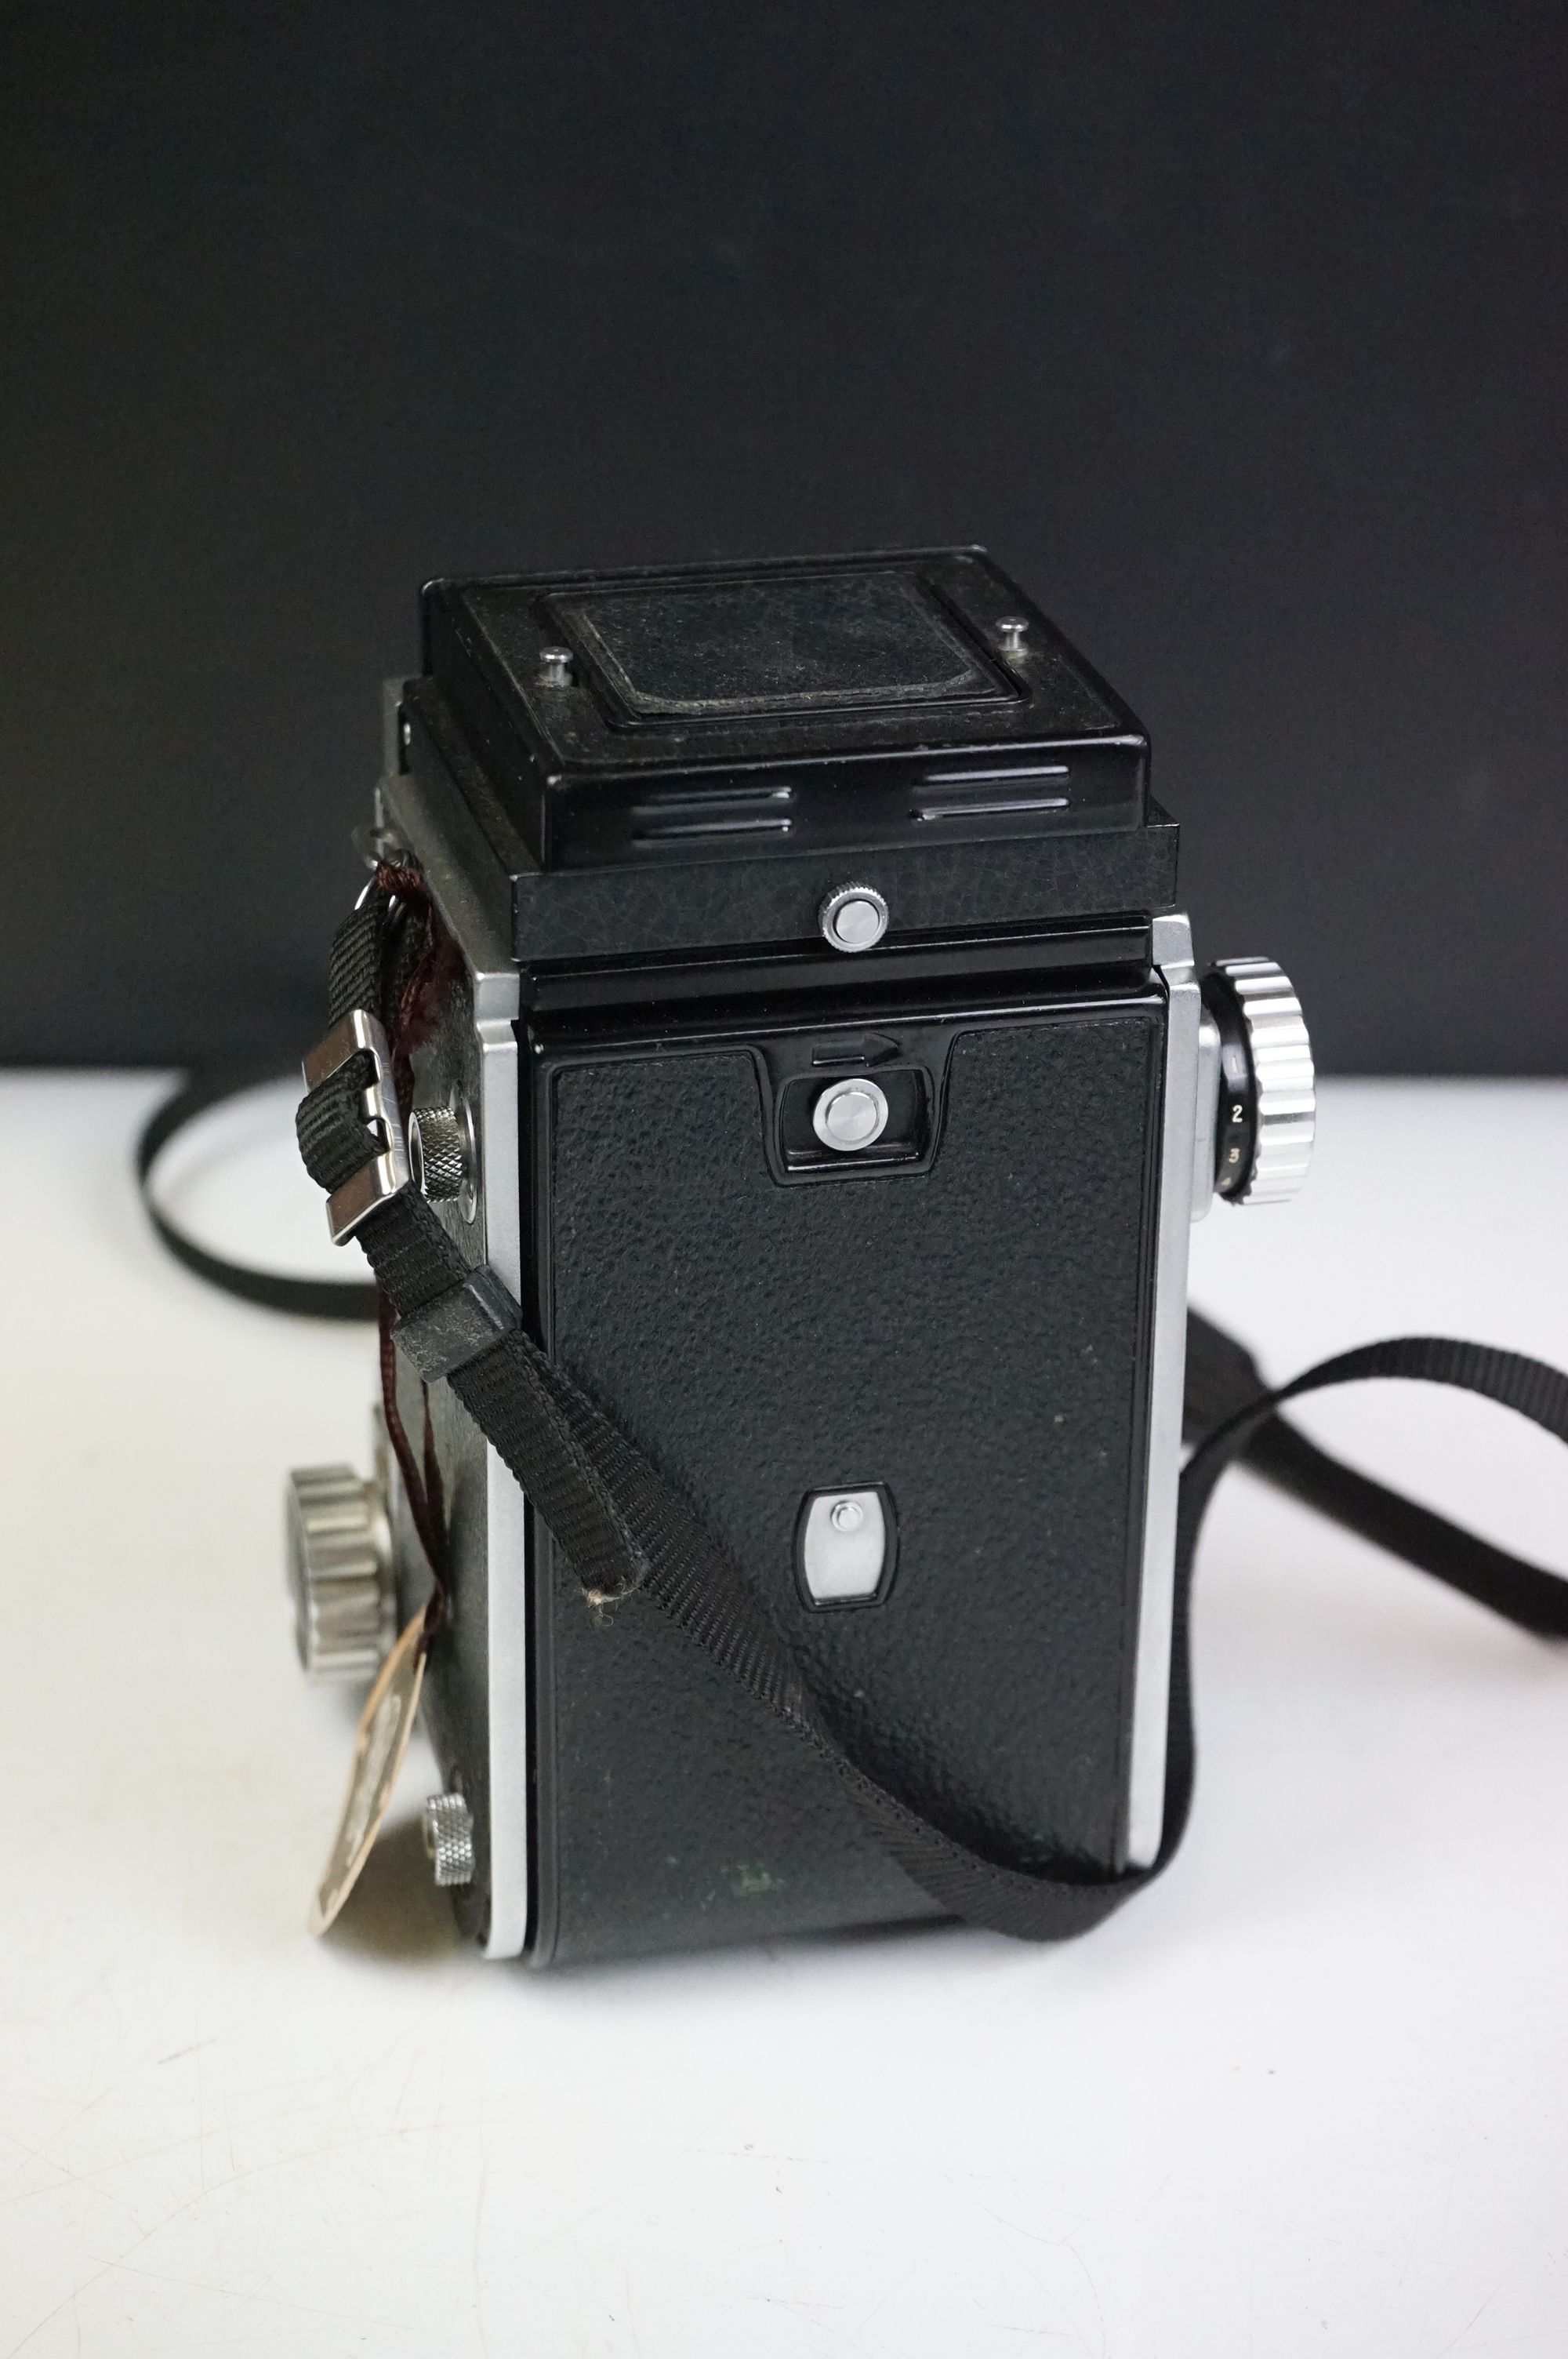 Mamiya Flex C Professional Medium Format Camera with accessories - Image 5 of 14